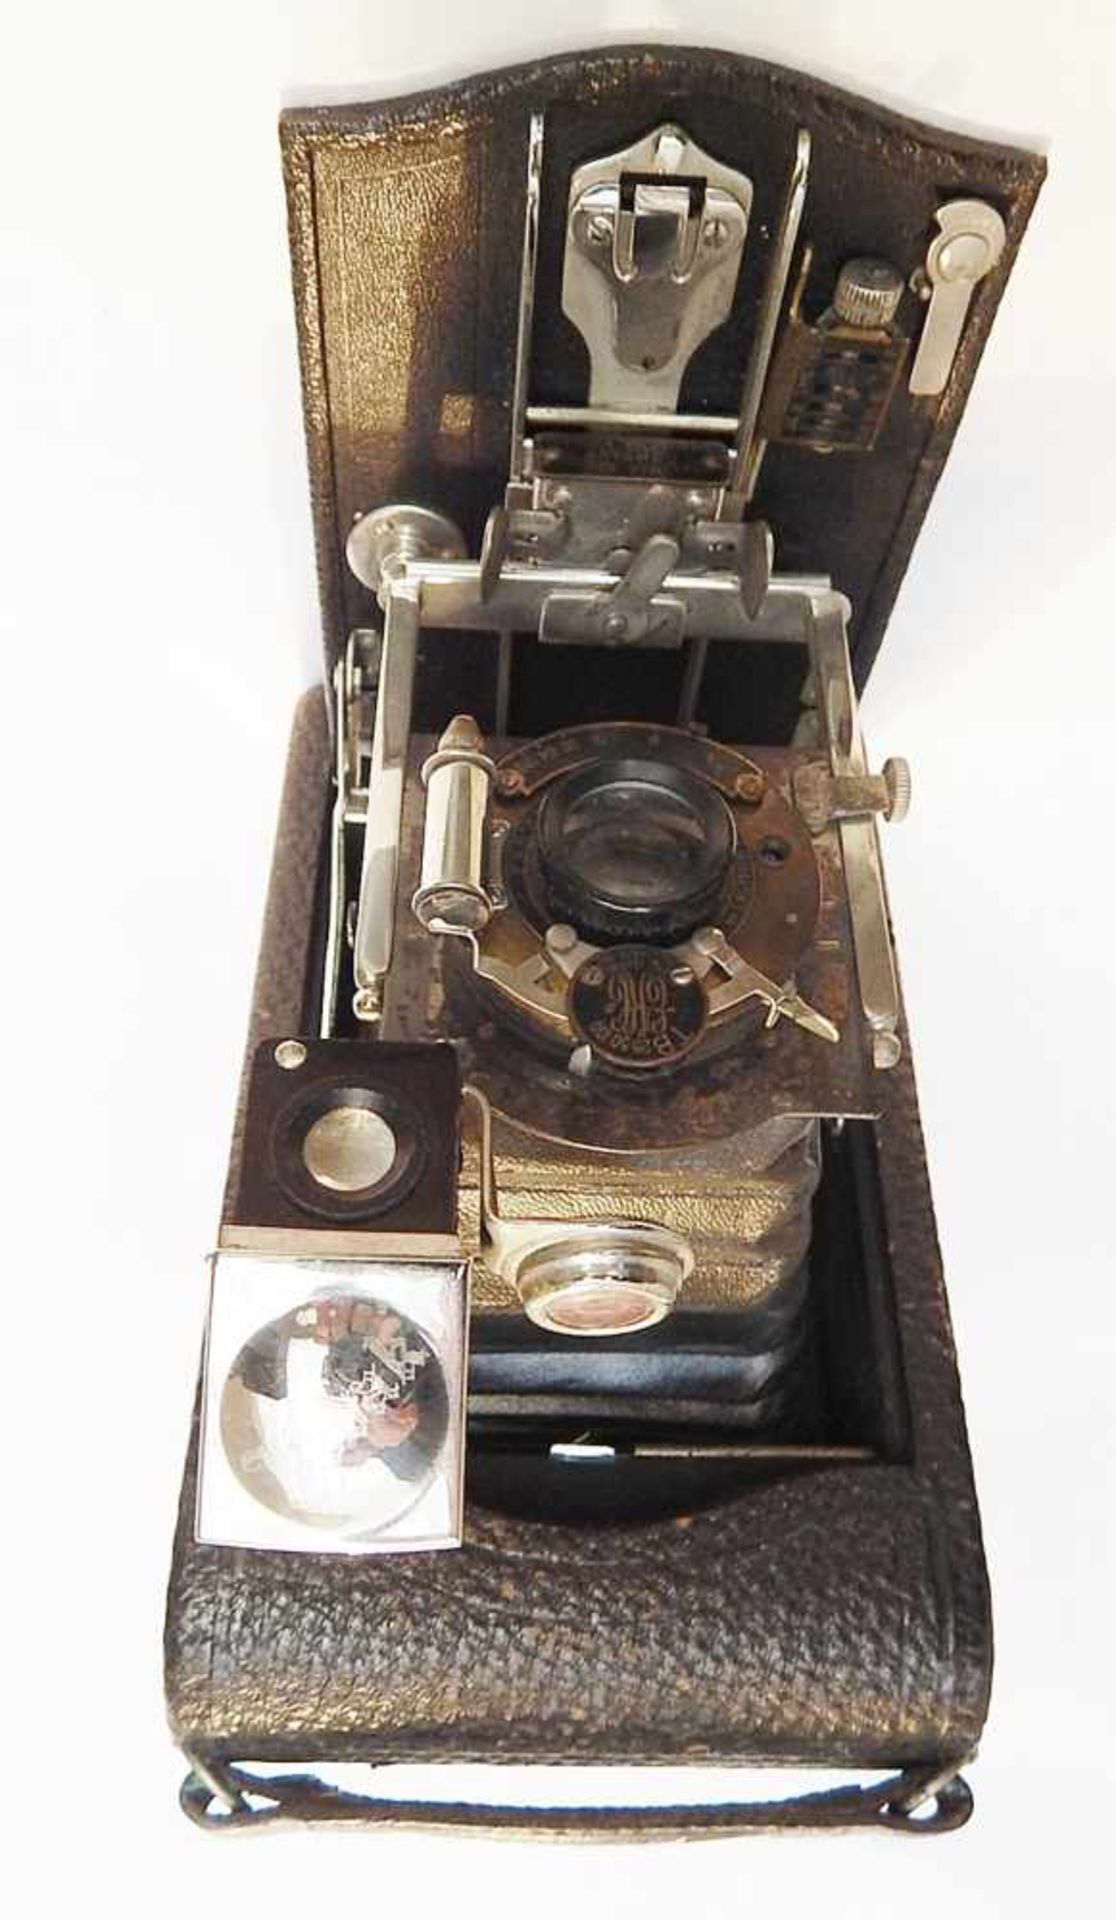 Eastman Kodak Kamera, Rochester NY, 1930/40er Jahre